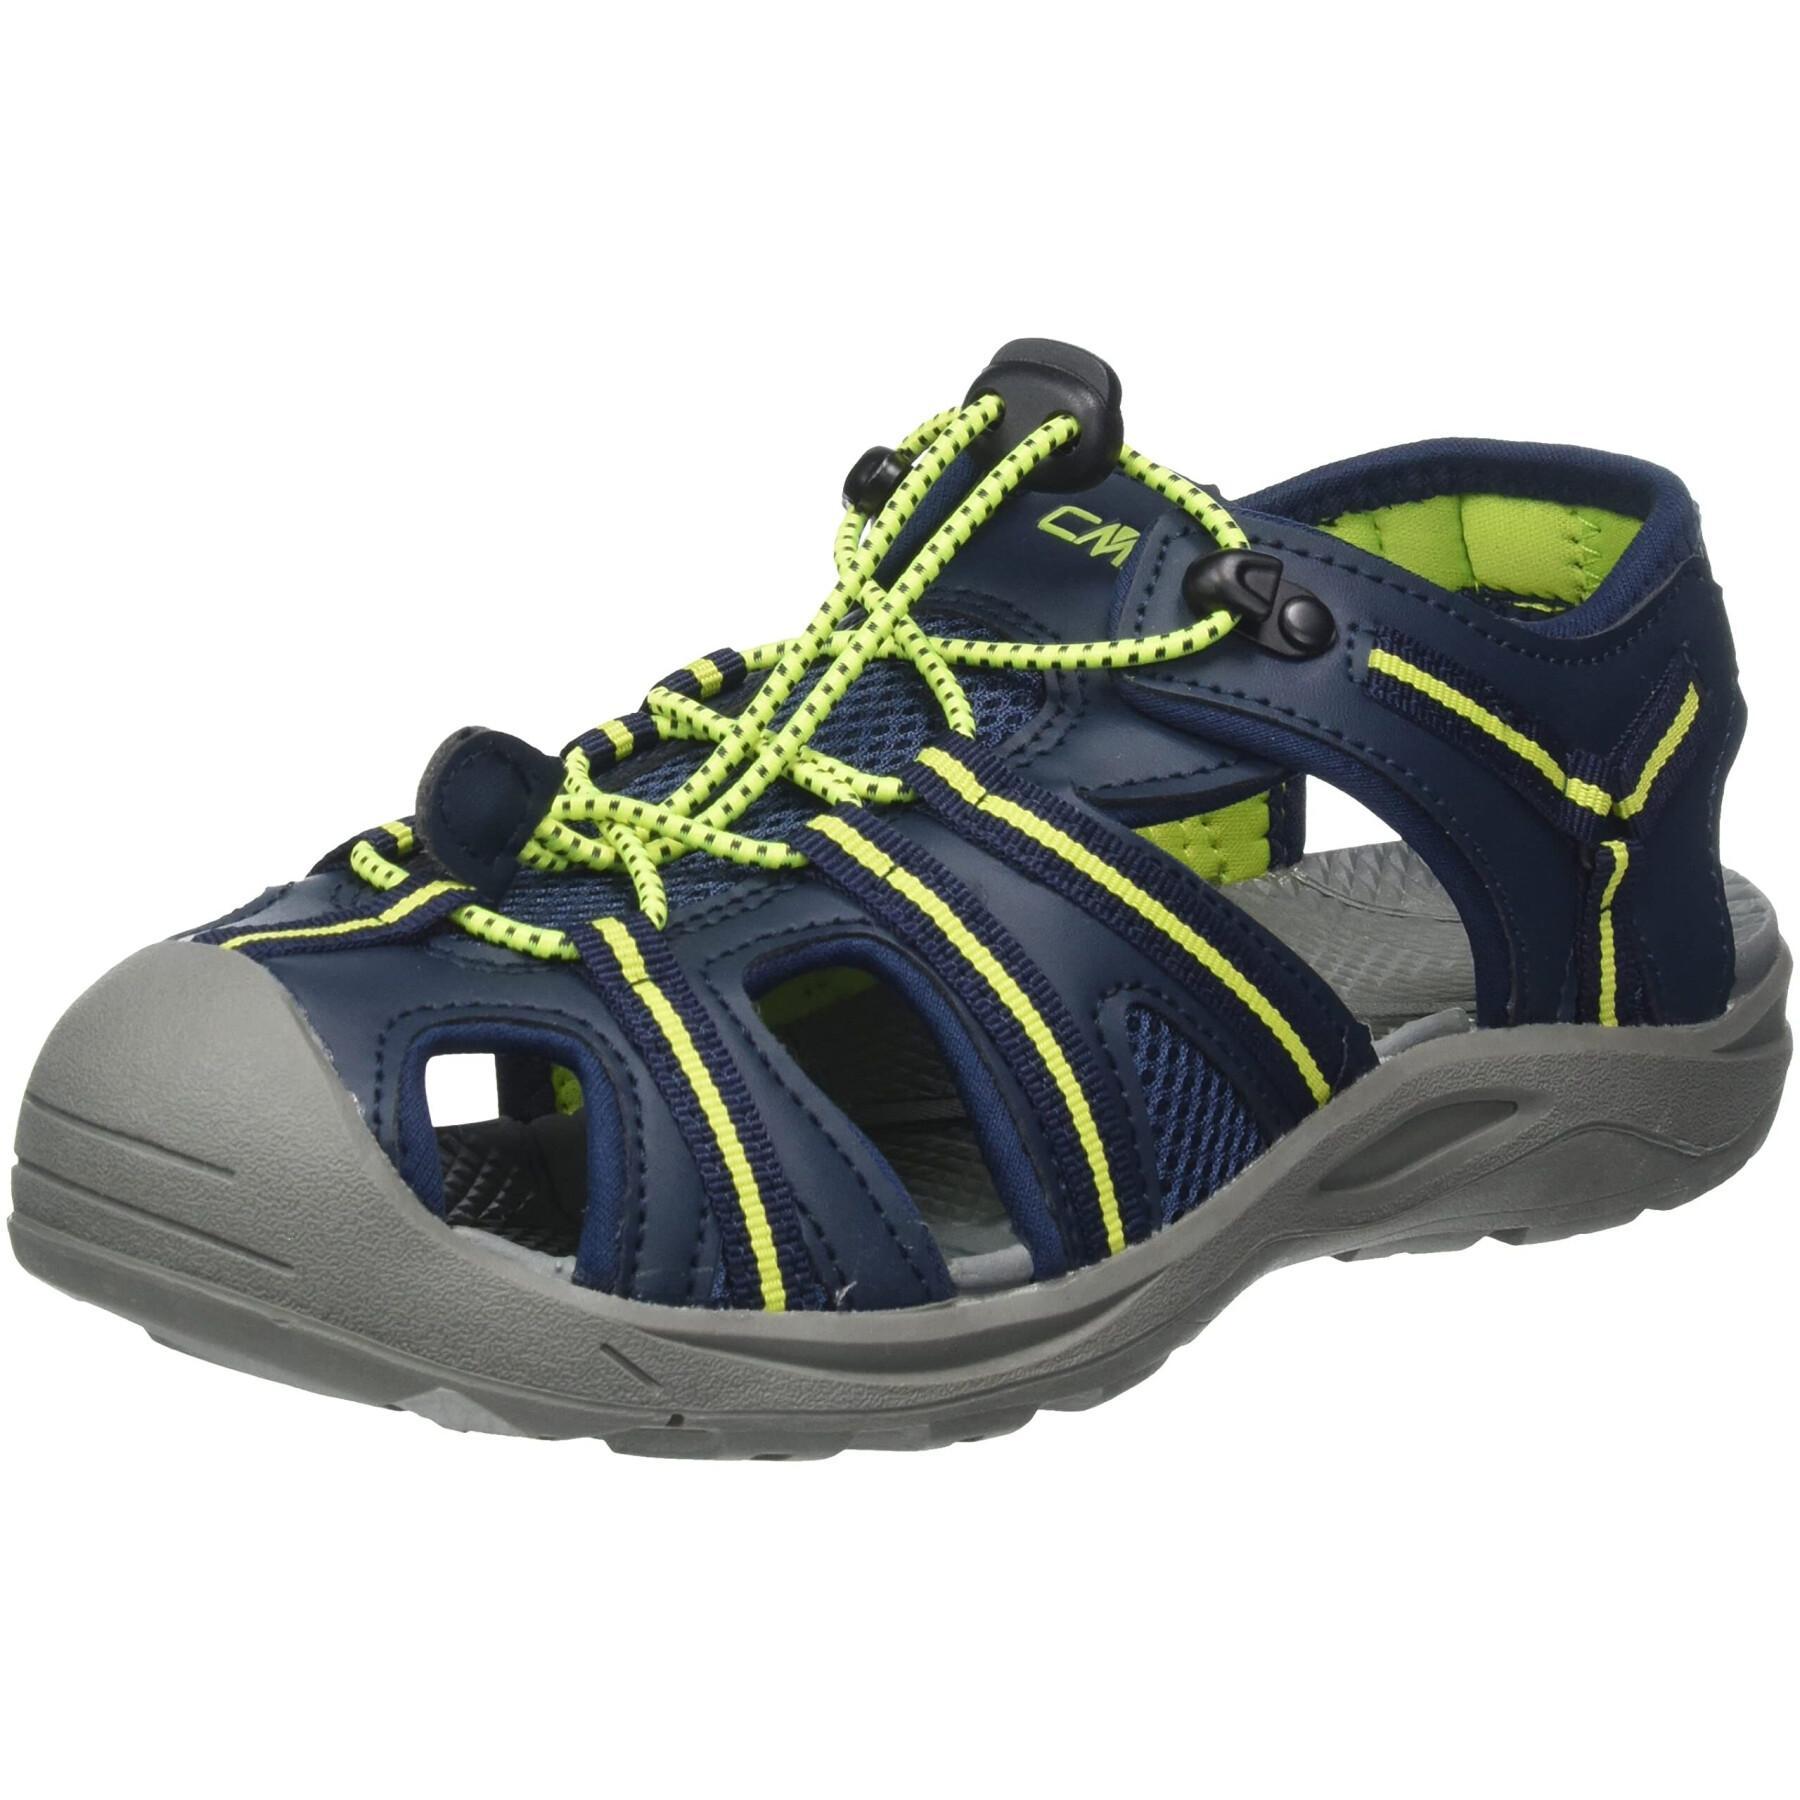 Aquari - Sandals Children\'s sandals - Hiking Hiking 2.0 Hiking Shoes - CMP